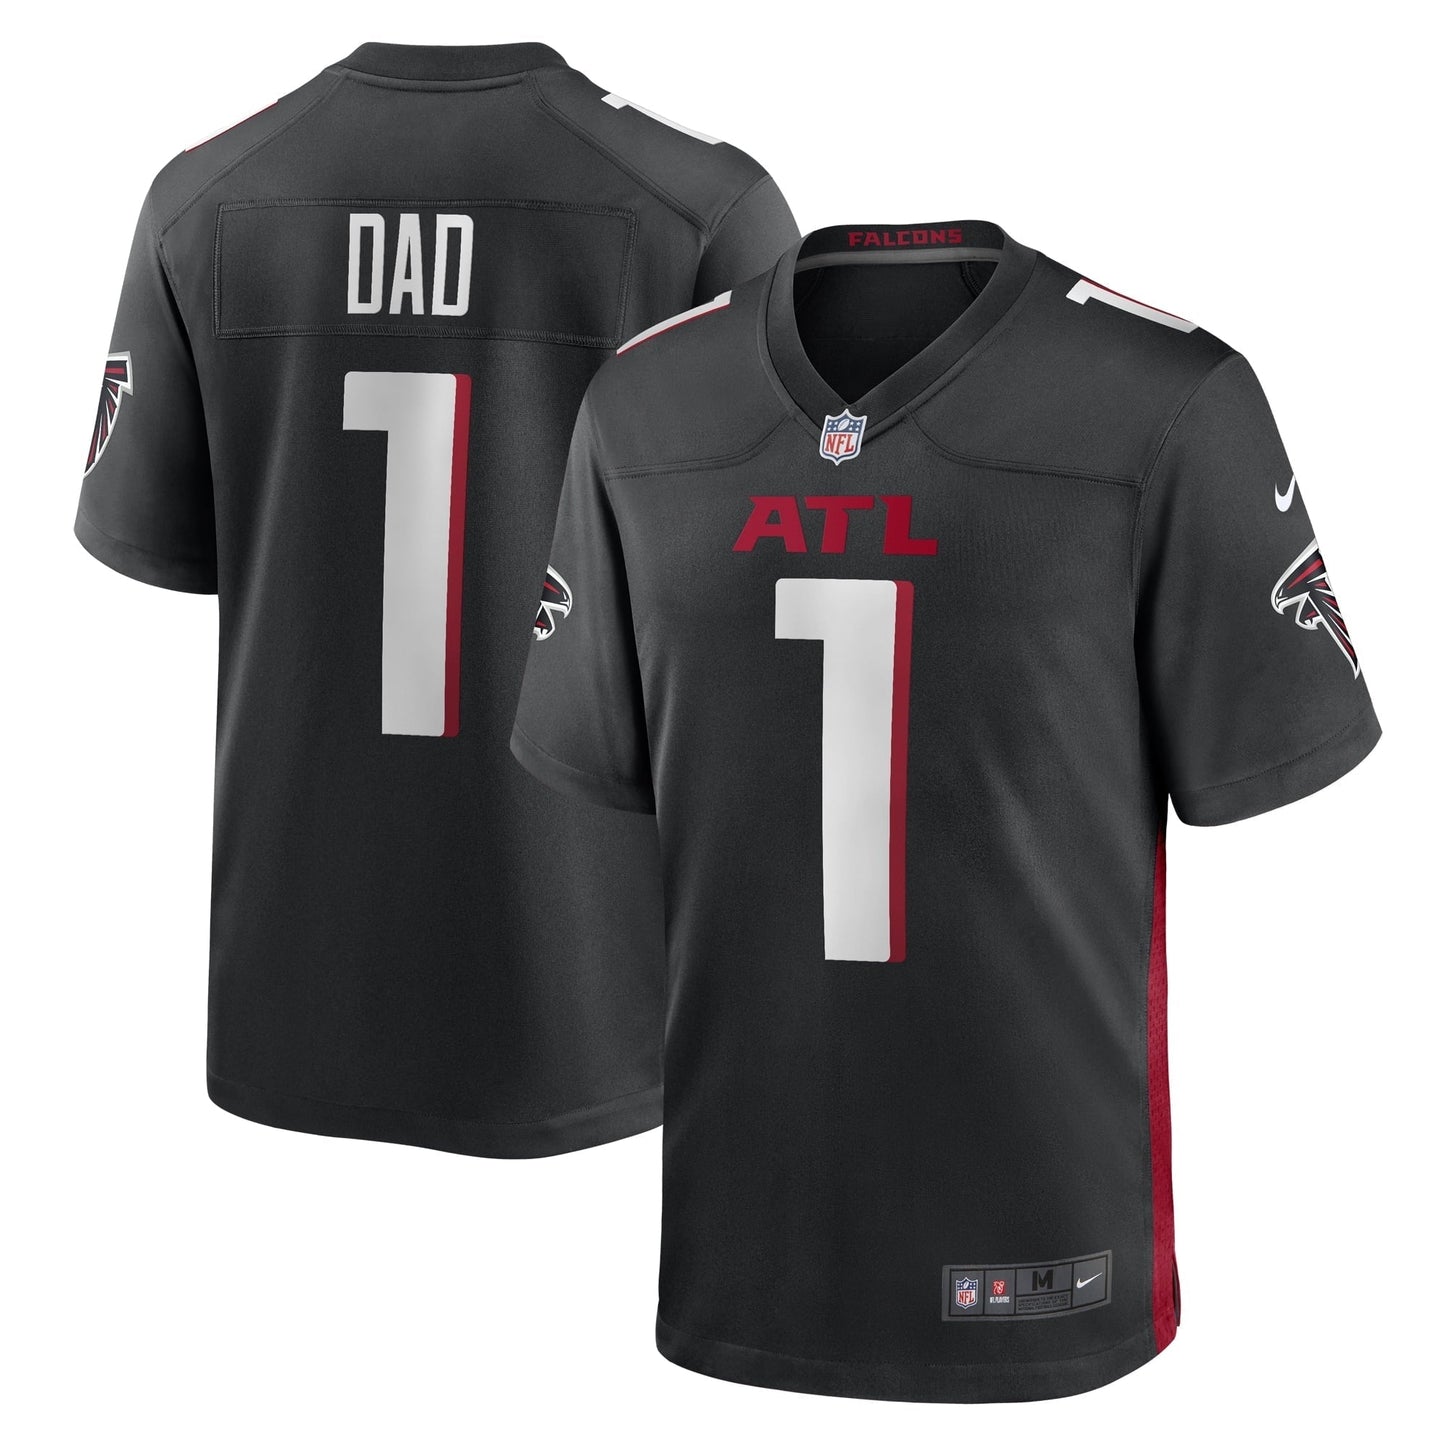 Men's Nike Number 1 Dad Black Atlanta Falcons Game Jersey